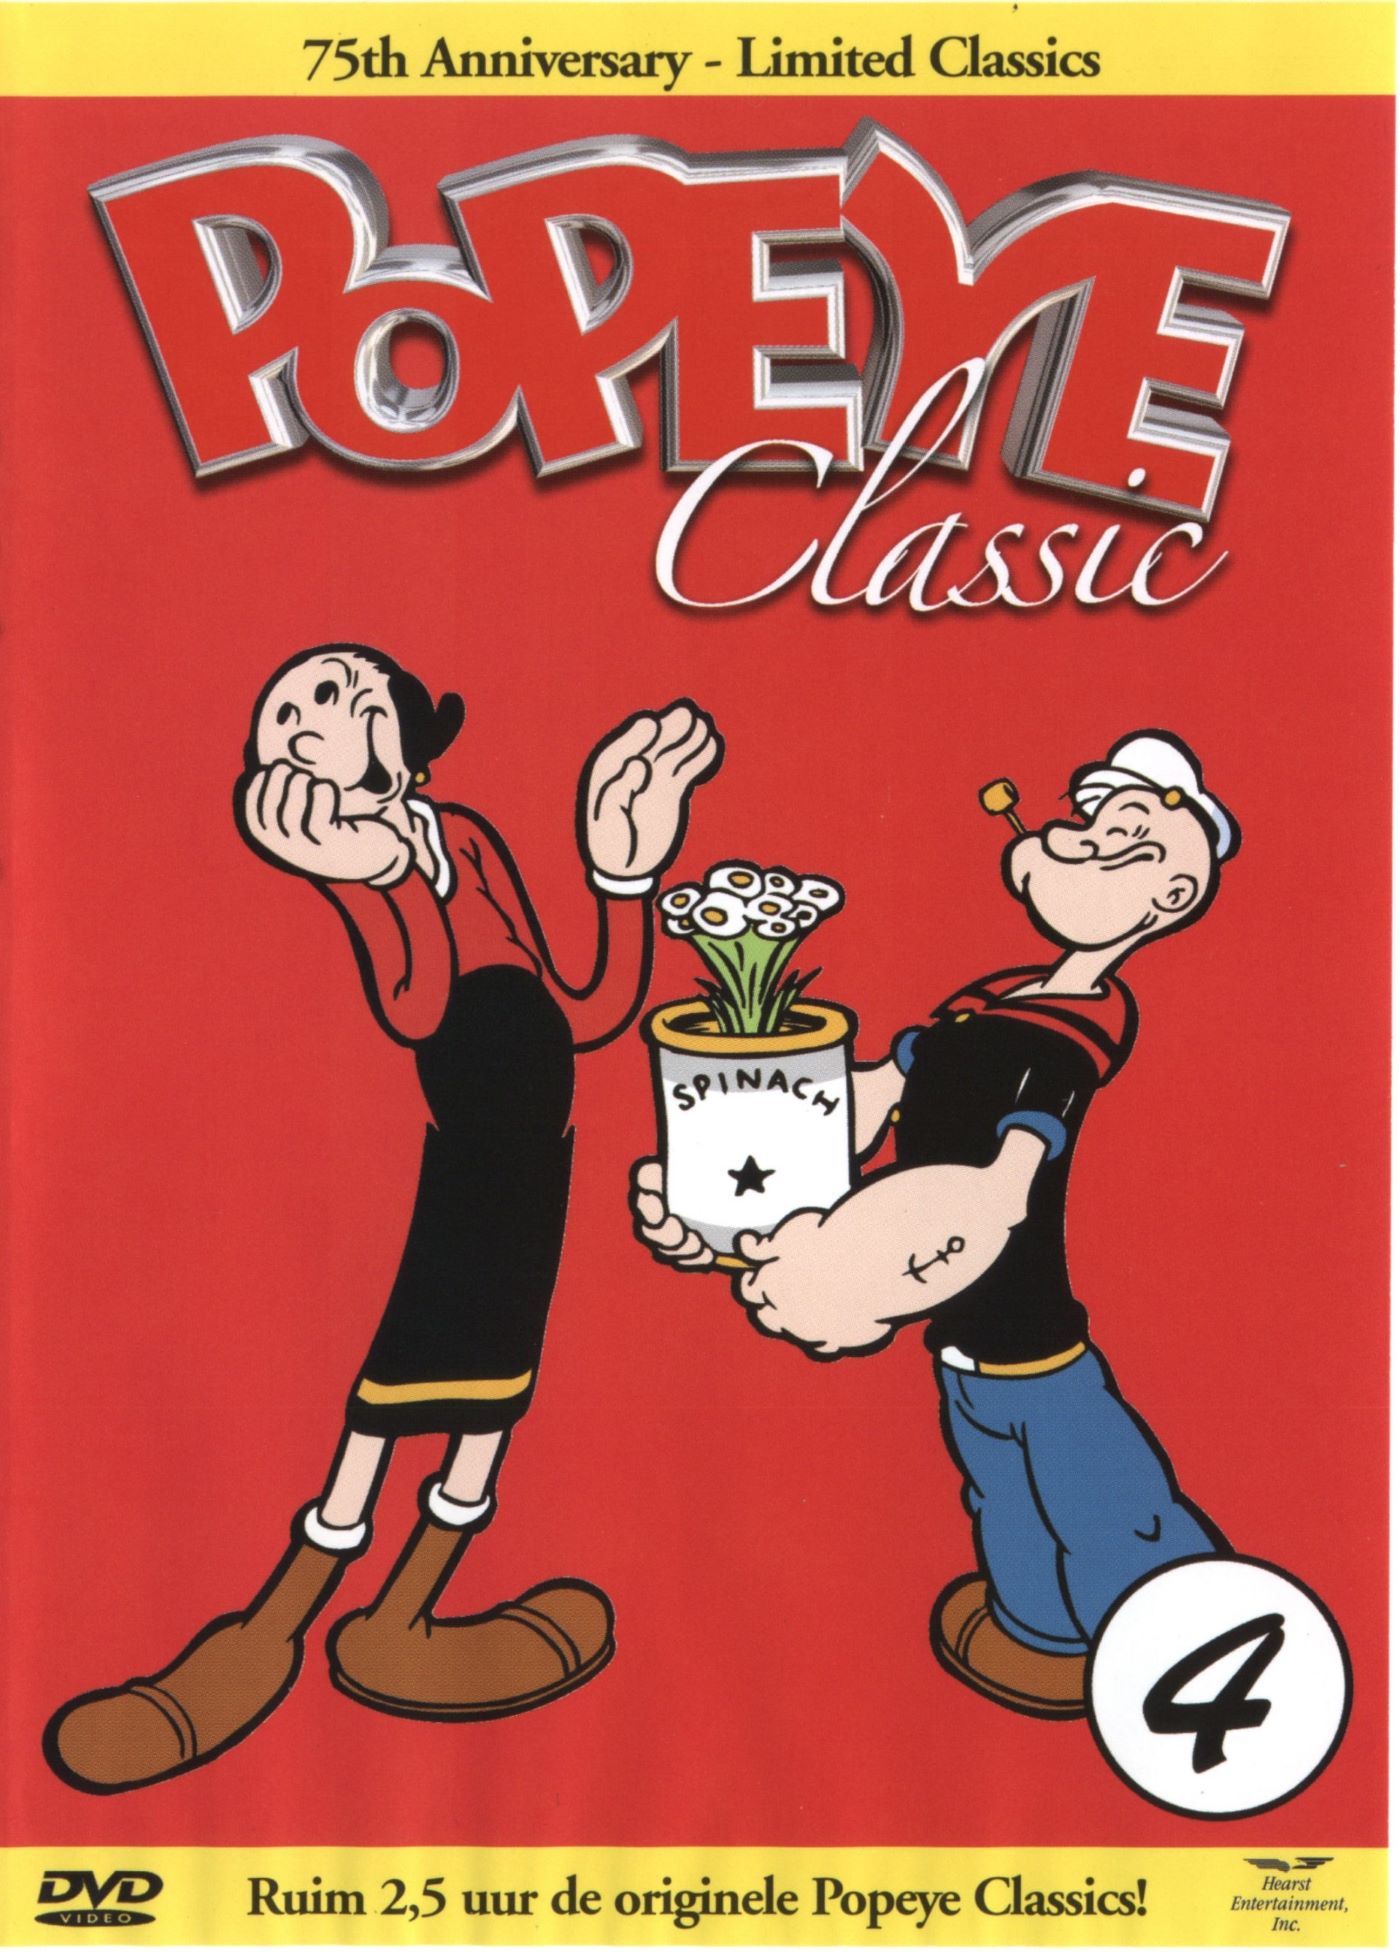 Popeye Classic - 75th Anniversary Limited Edition (DVD 4 van 4)